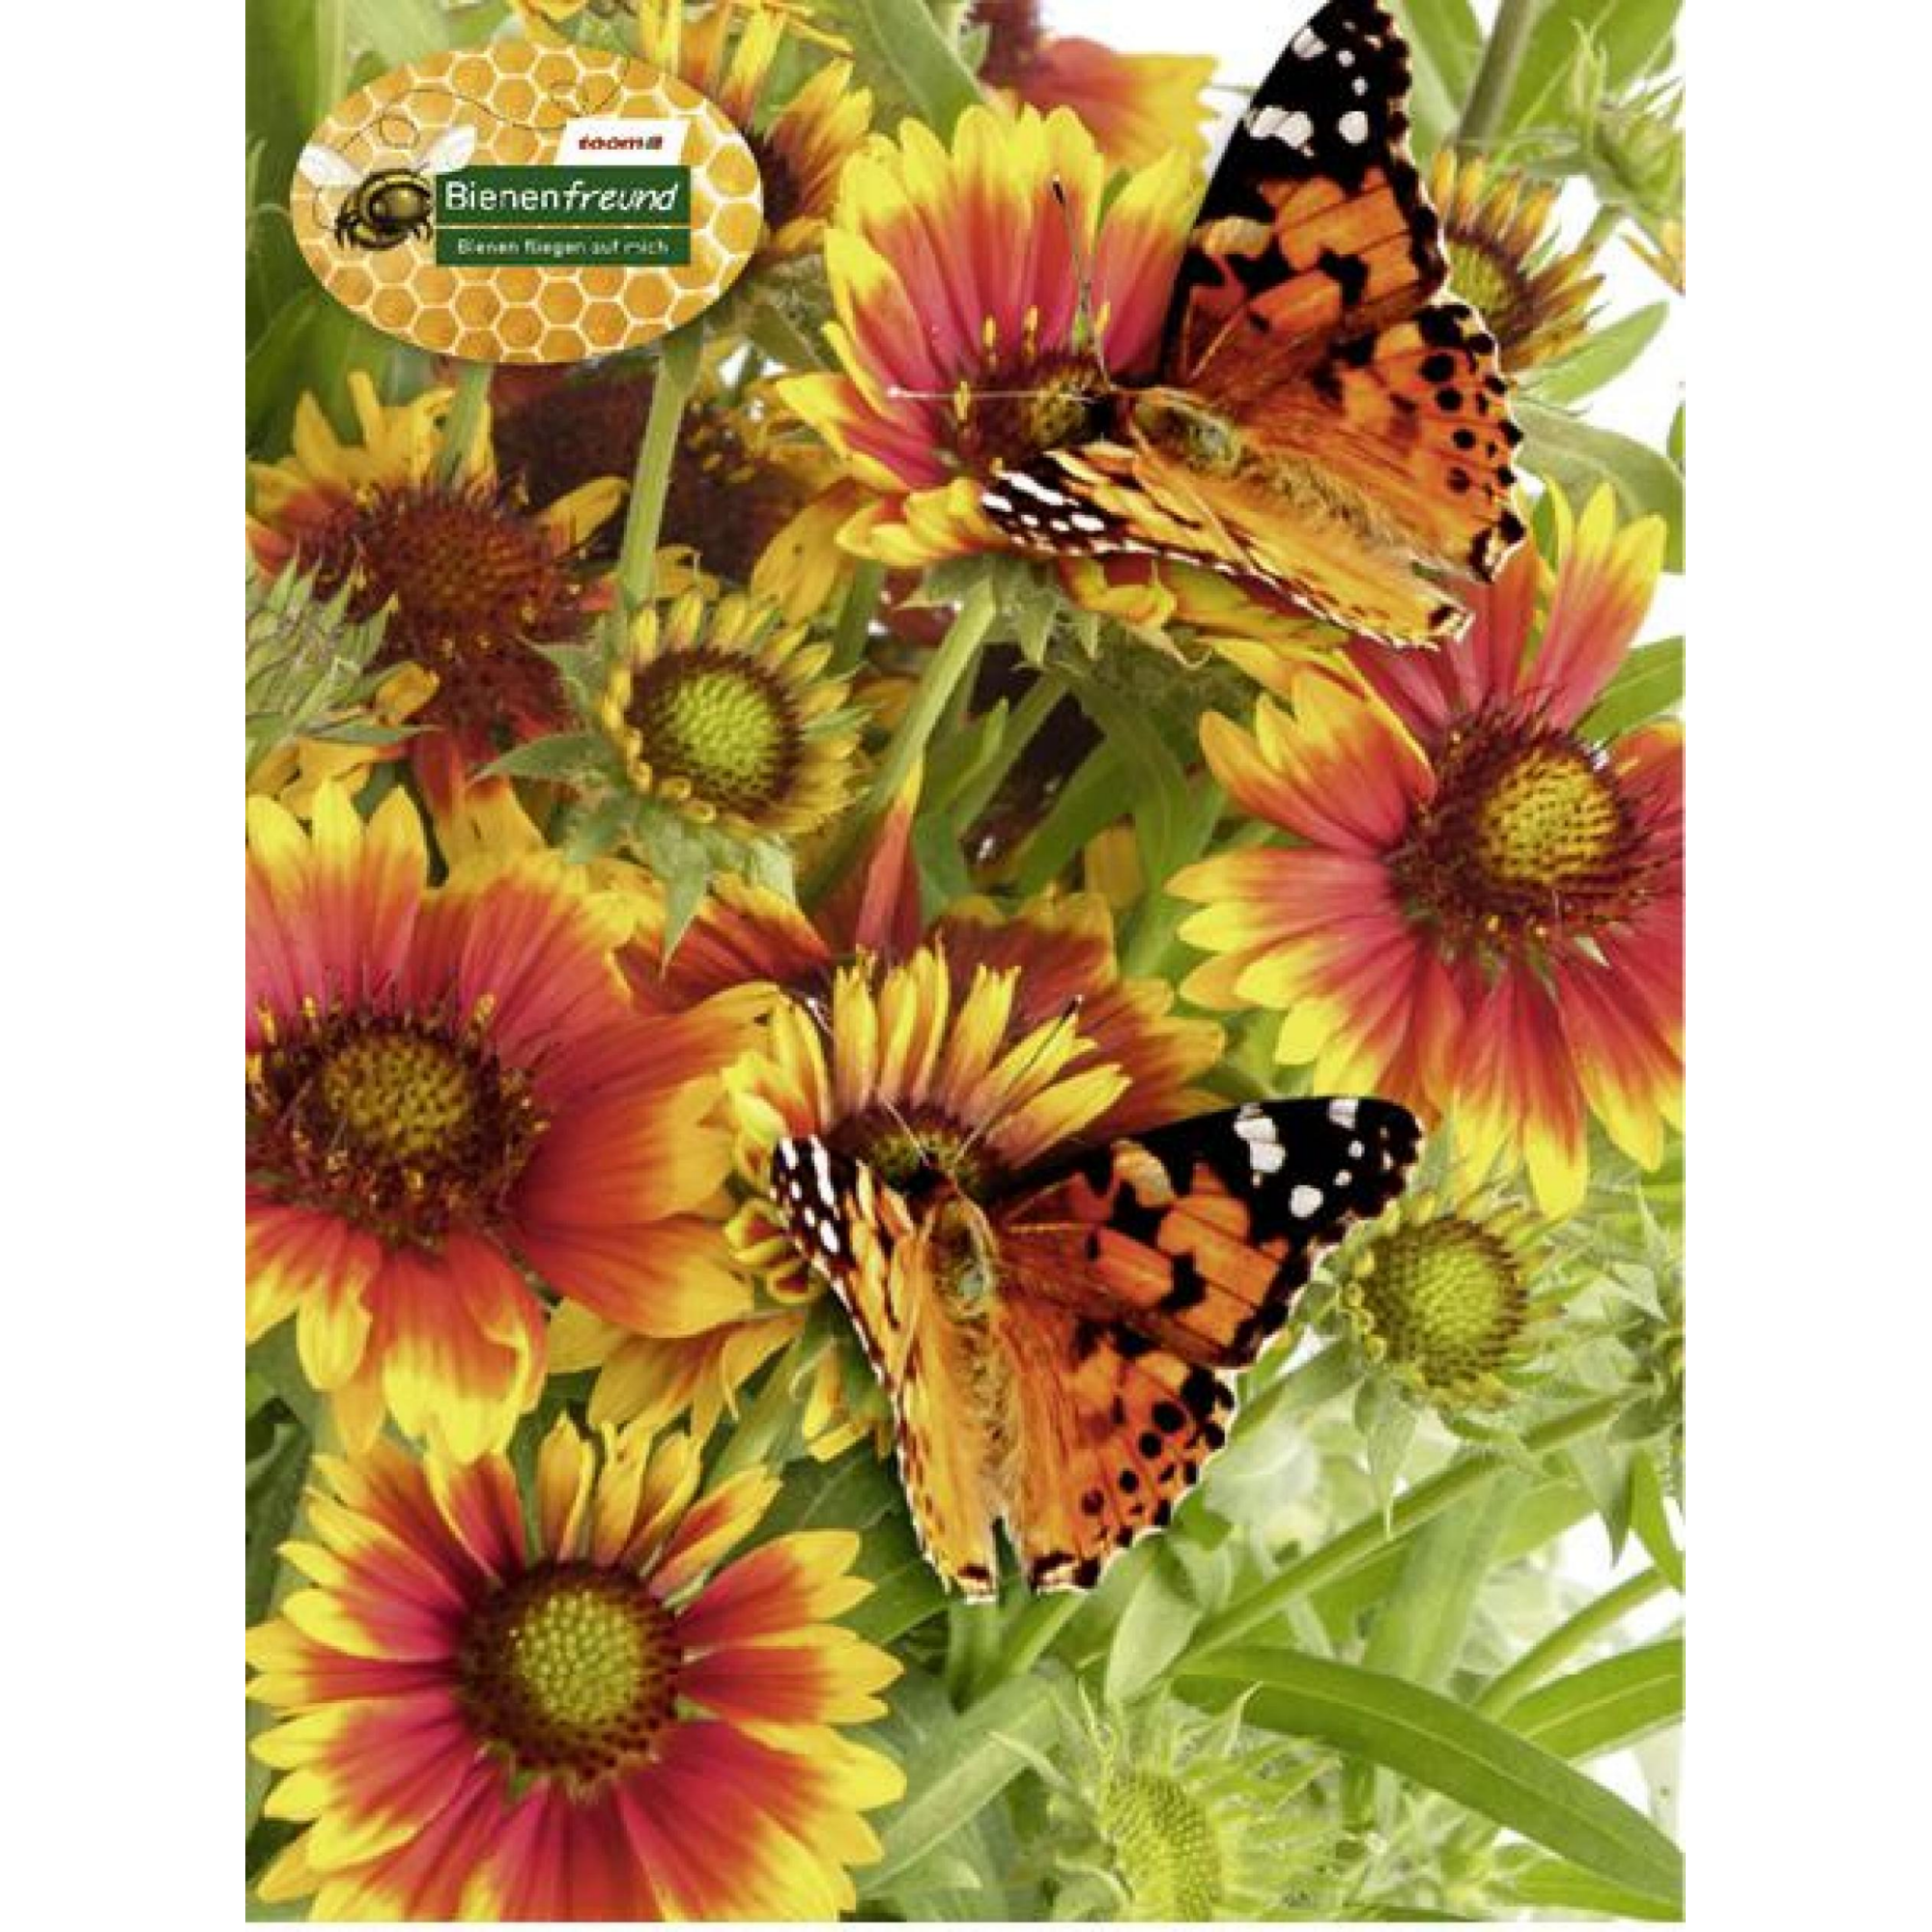 Bienen- und Schmetterlingsstauden + product picture